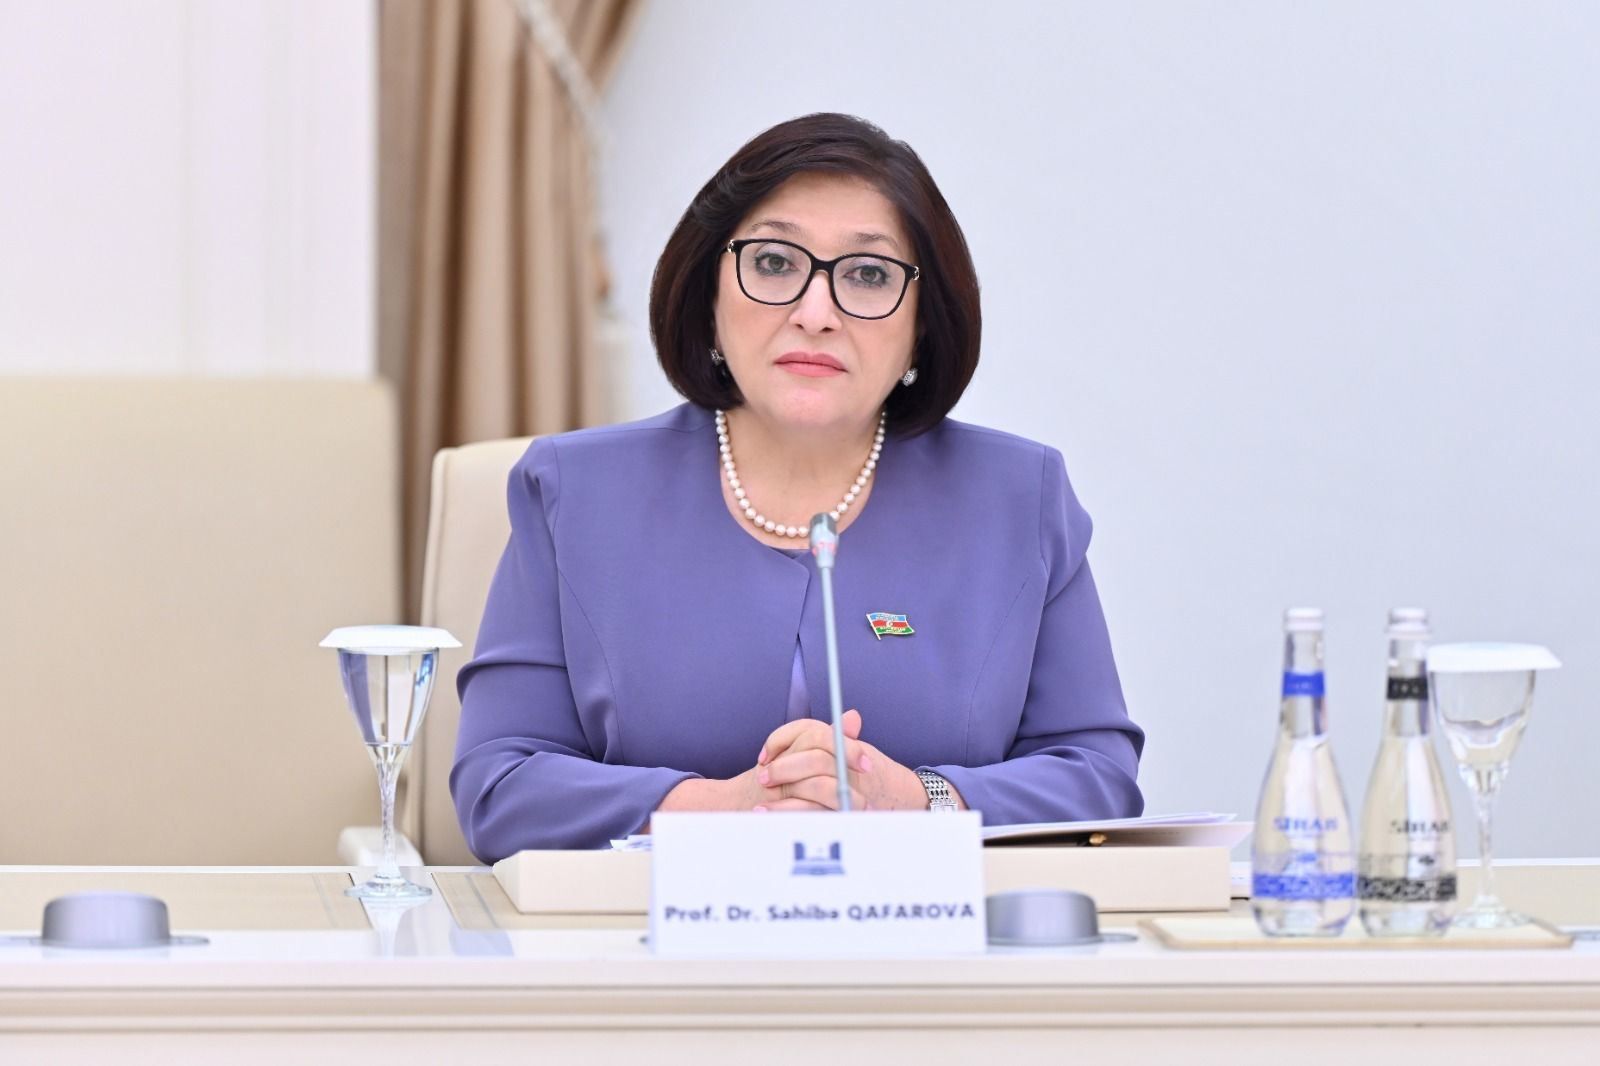 Speaker Gafarova: Azerbaijan wants to ensure peace and security in region